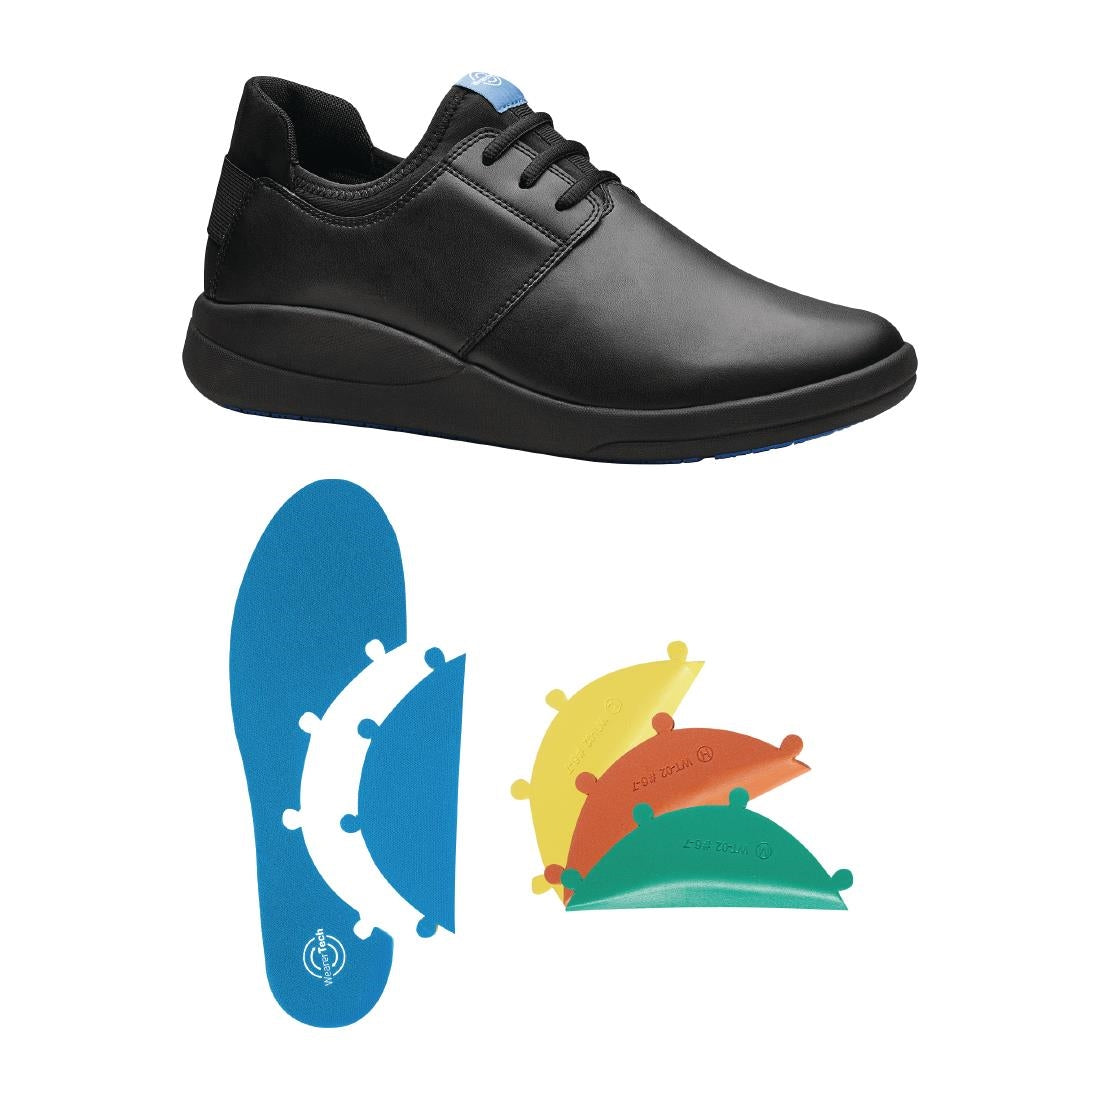 WearerTech Relieve Shoe Black/Black with Modular Insole Size 46